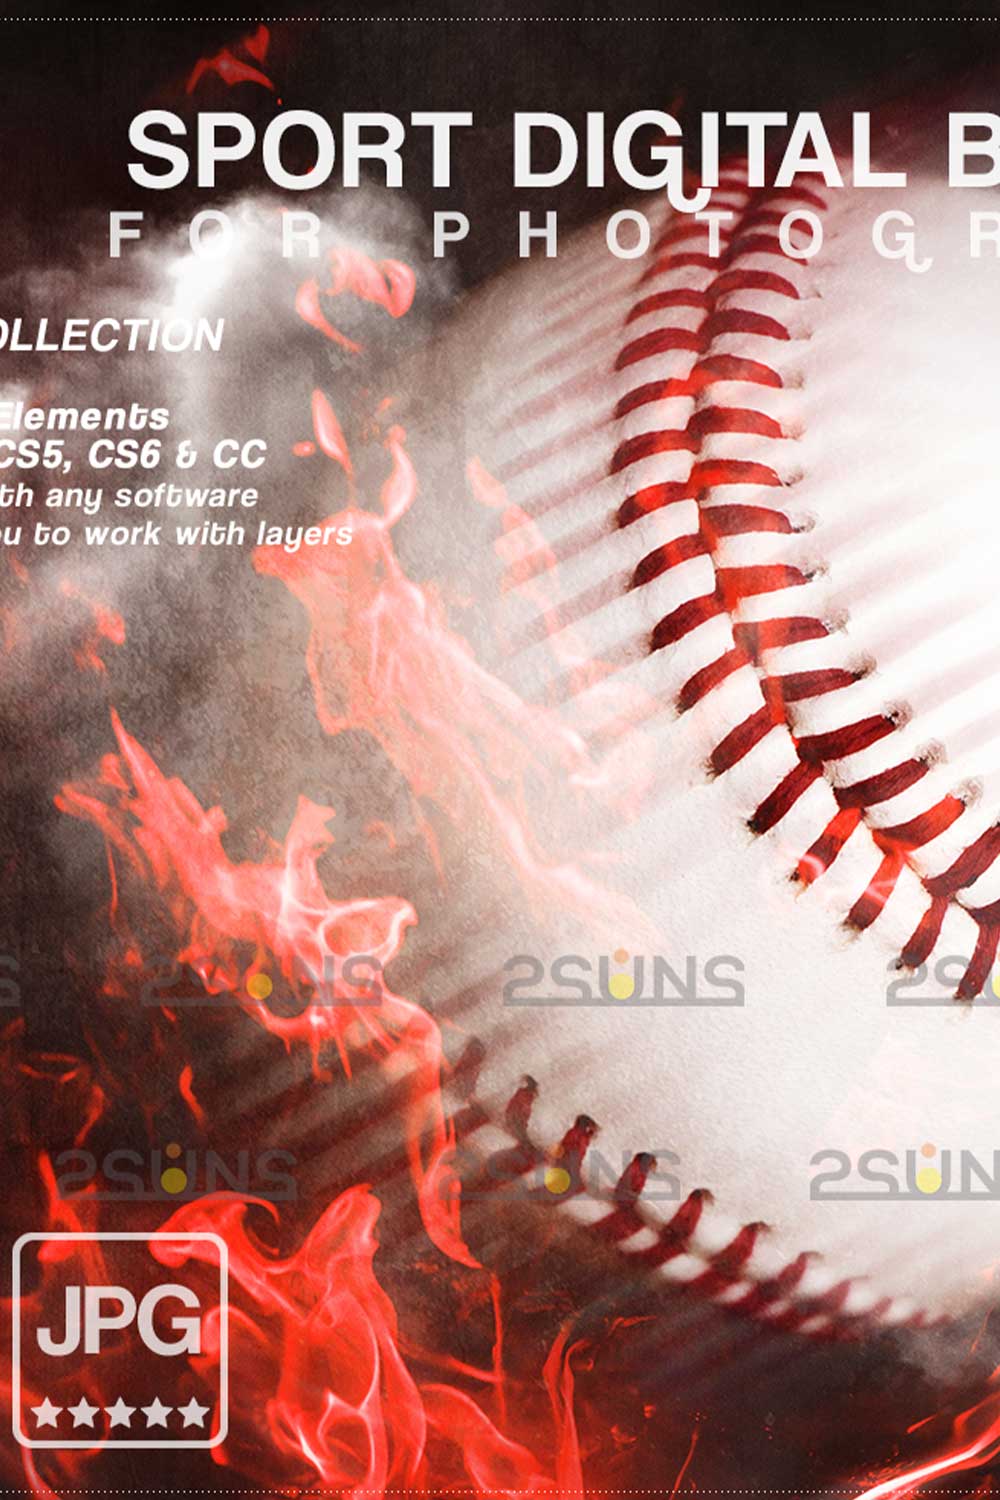 Baseball Fire And Dust Backdrop Sports Digital Photoshop Overlay Pinterest Image.